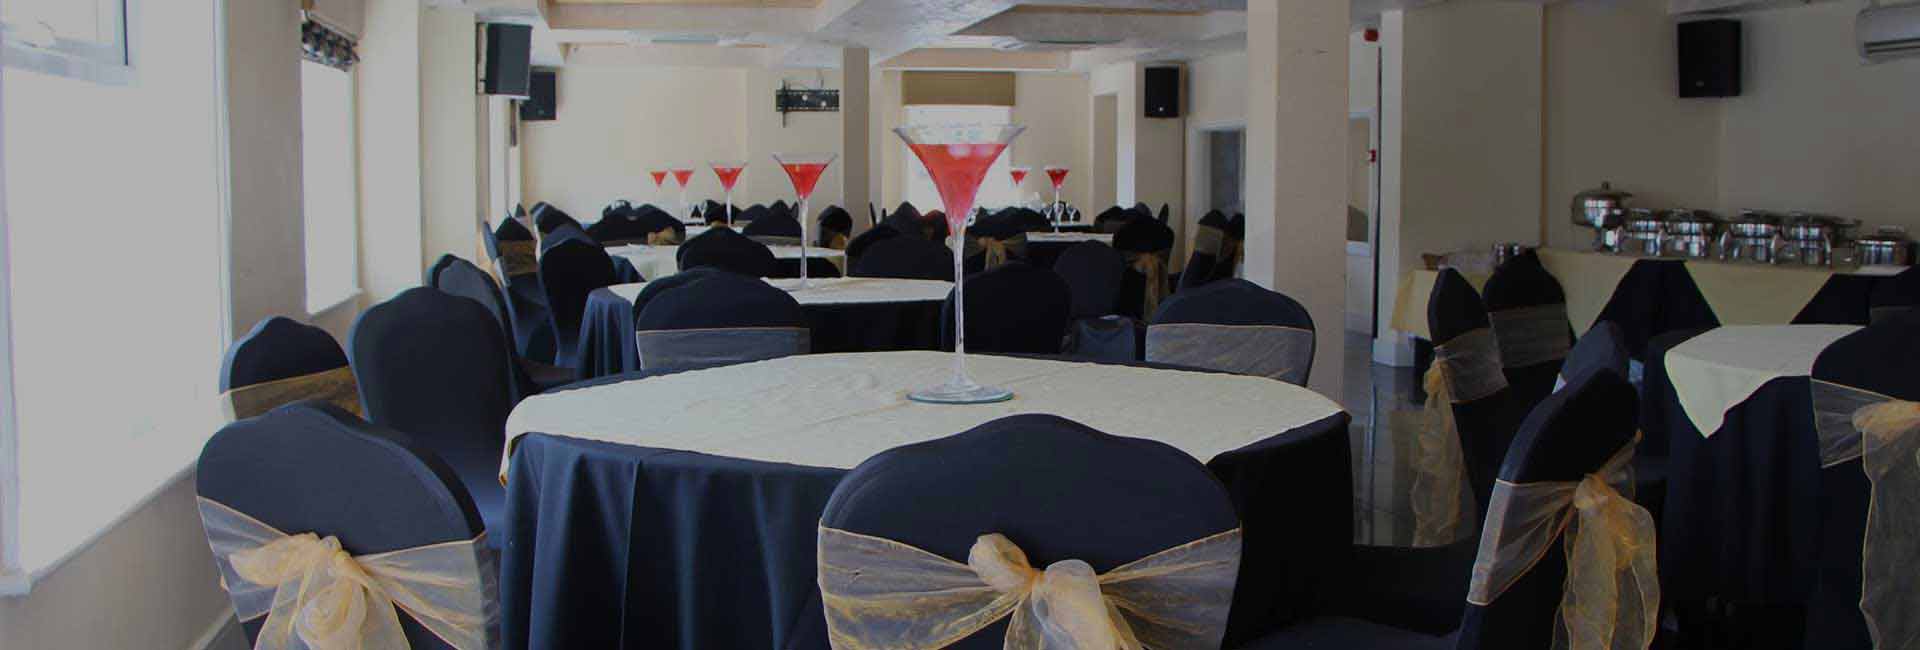 Design banquet hall